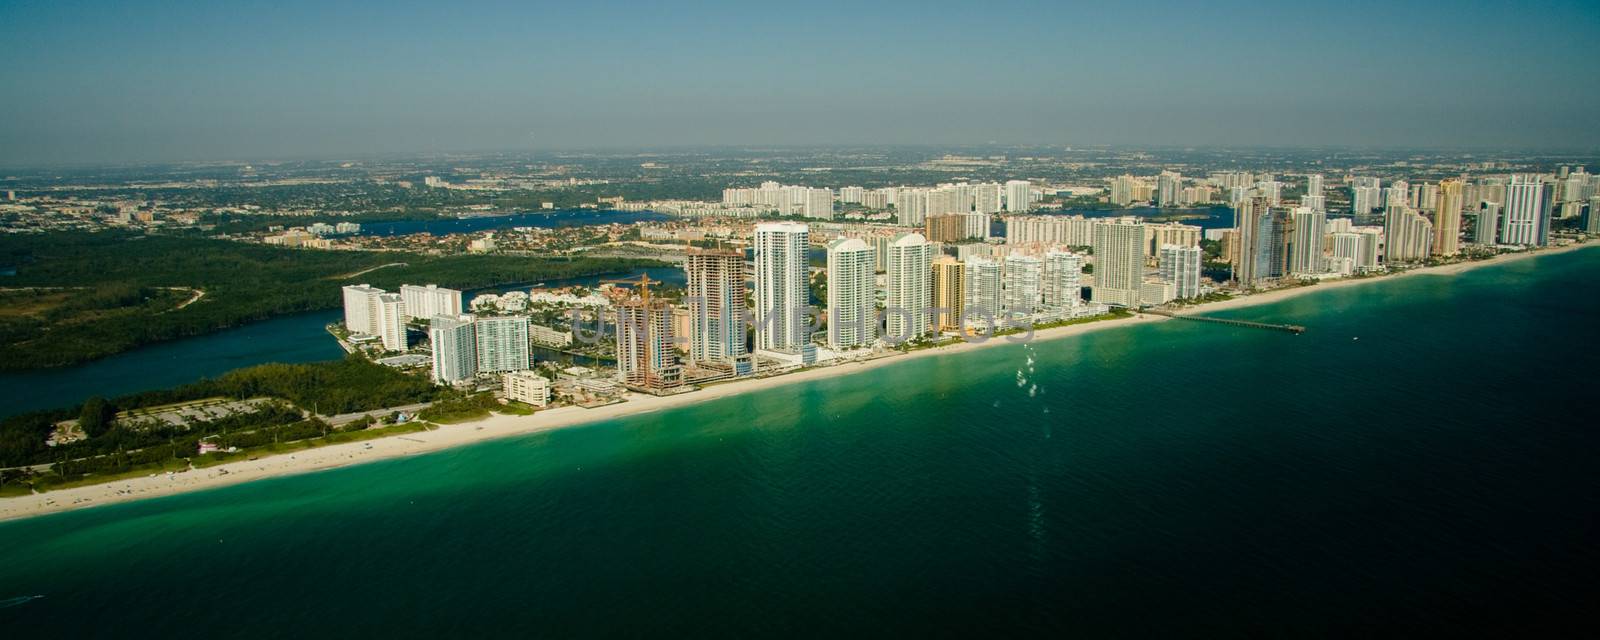 Miami shores by CelsoDiniz